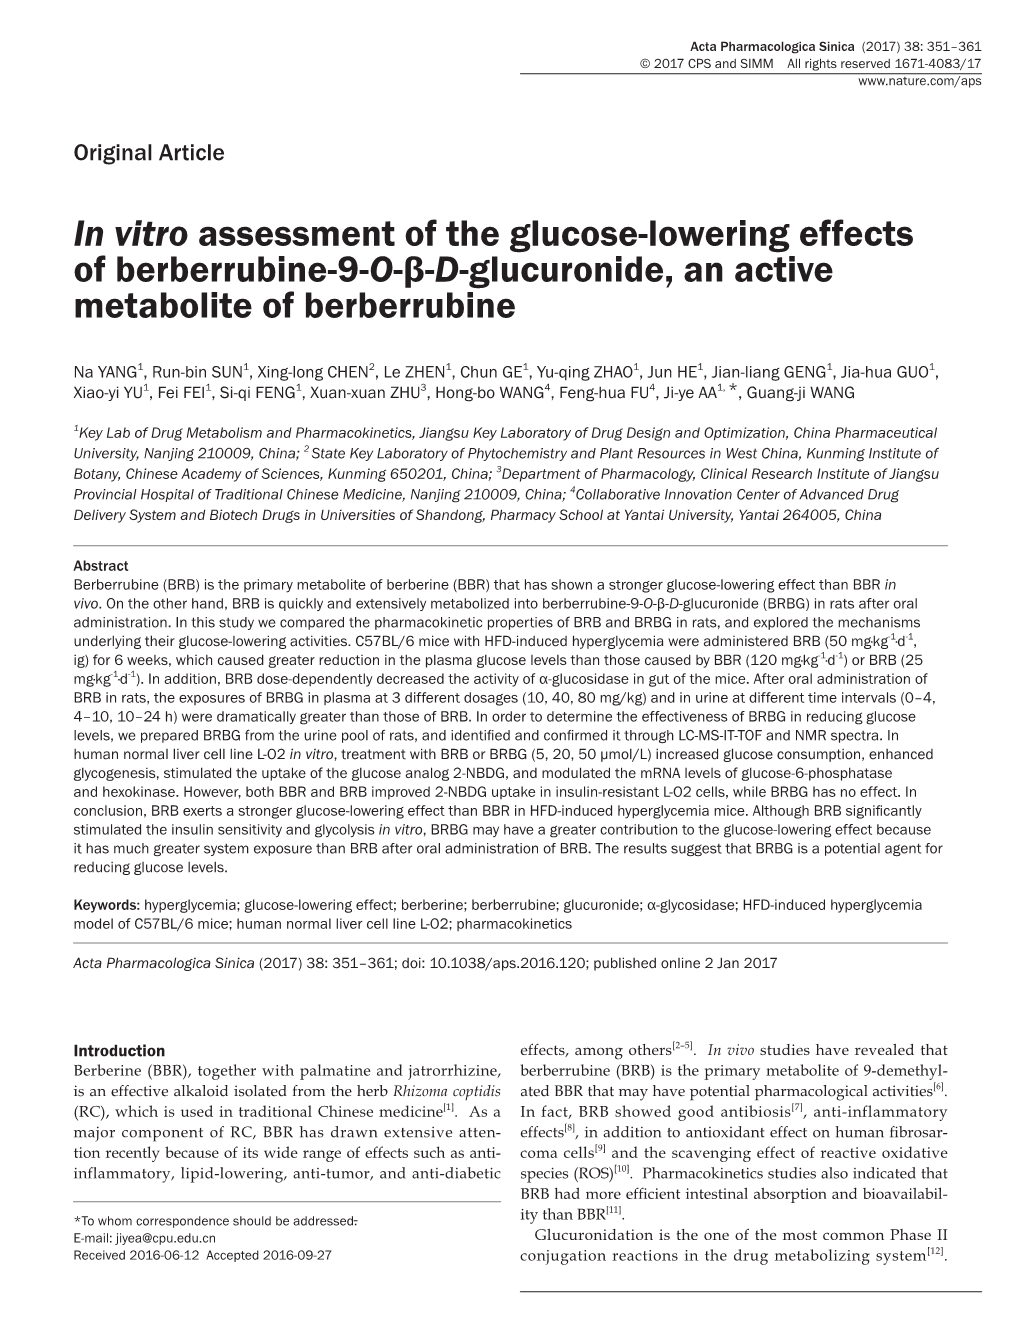 In Vitro Assessment of the Glucose-Lowering Effects of Berberrubine-9-O-Β-D-Glucuronide, an Active Metabolite of Berberrubine